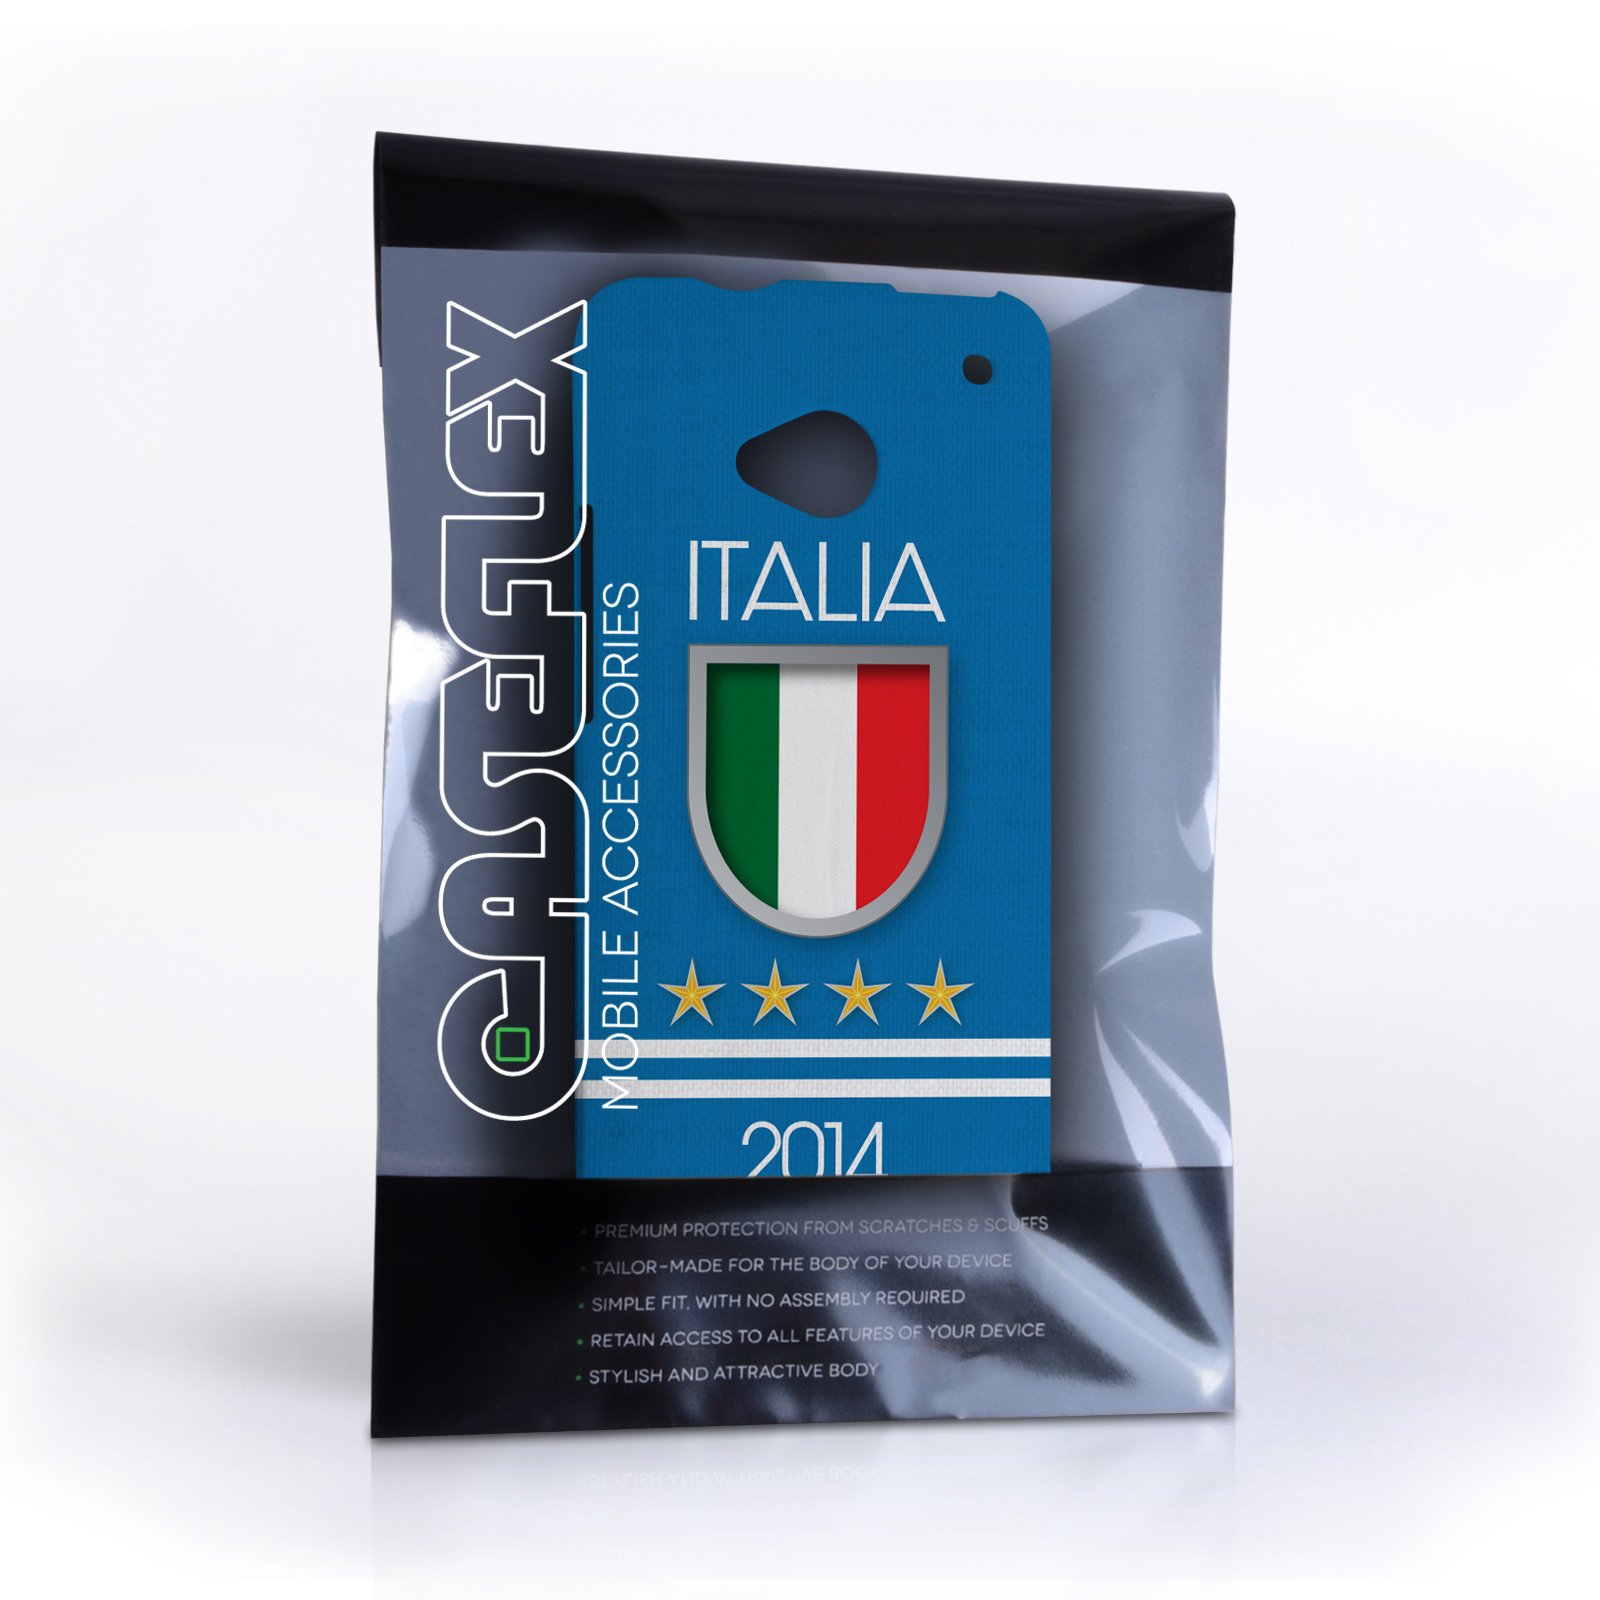 Caseflex HTC One Italia World Cup Case